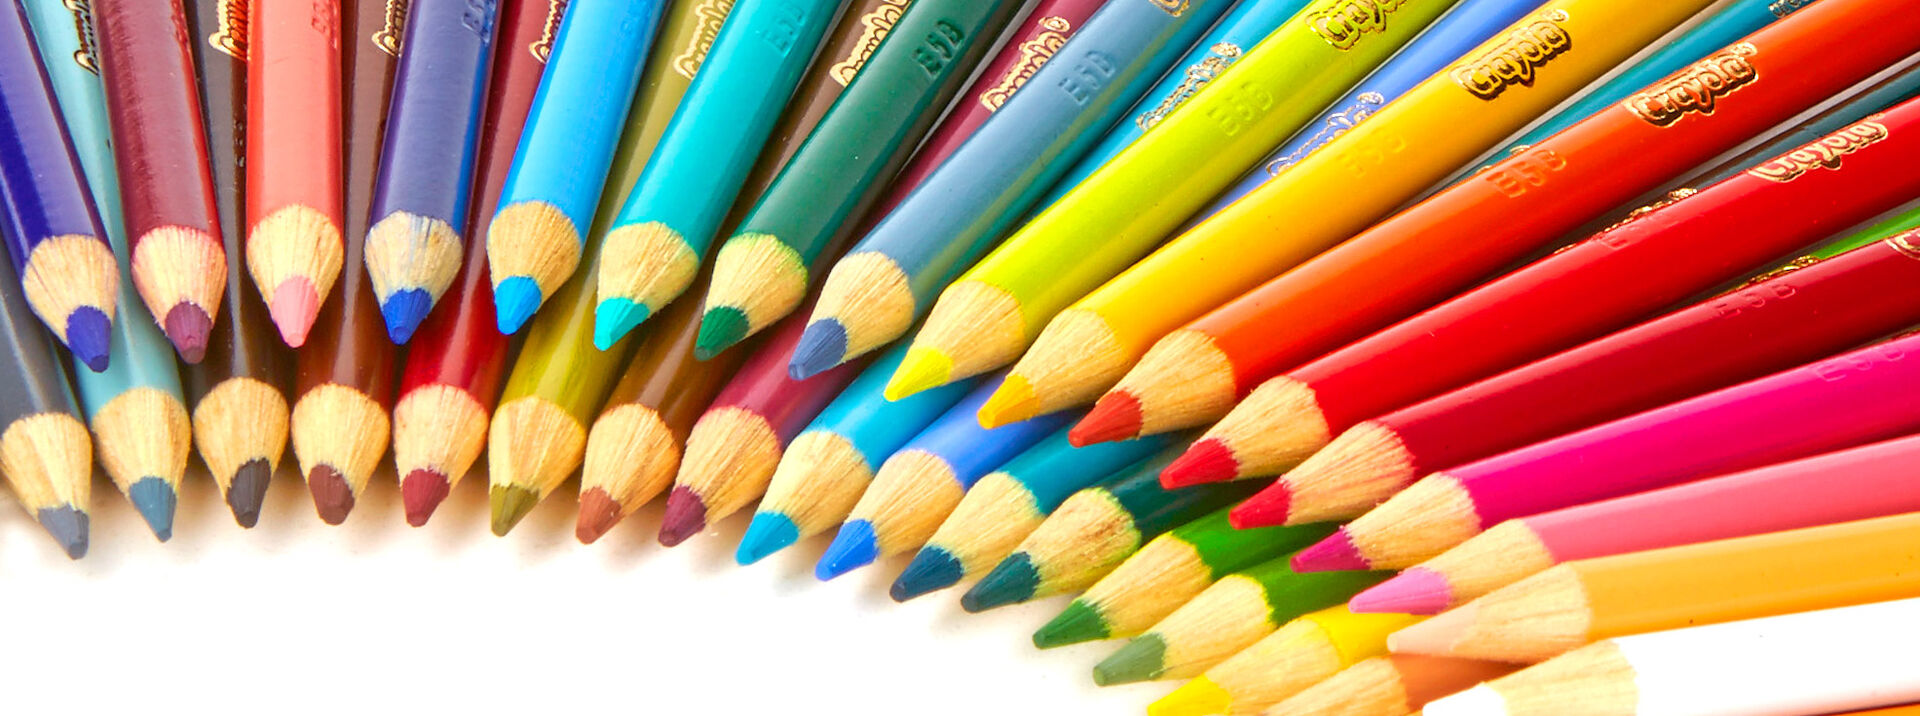 Crayola Colored Pencils Shop Colored Pencils Crayola HD Wallpapers Download Free Images Wallpaper [wallpaper896.blogspot.com]